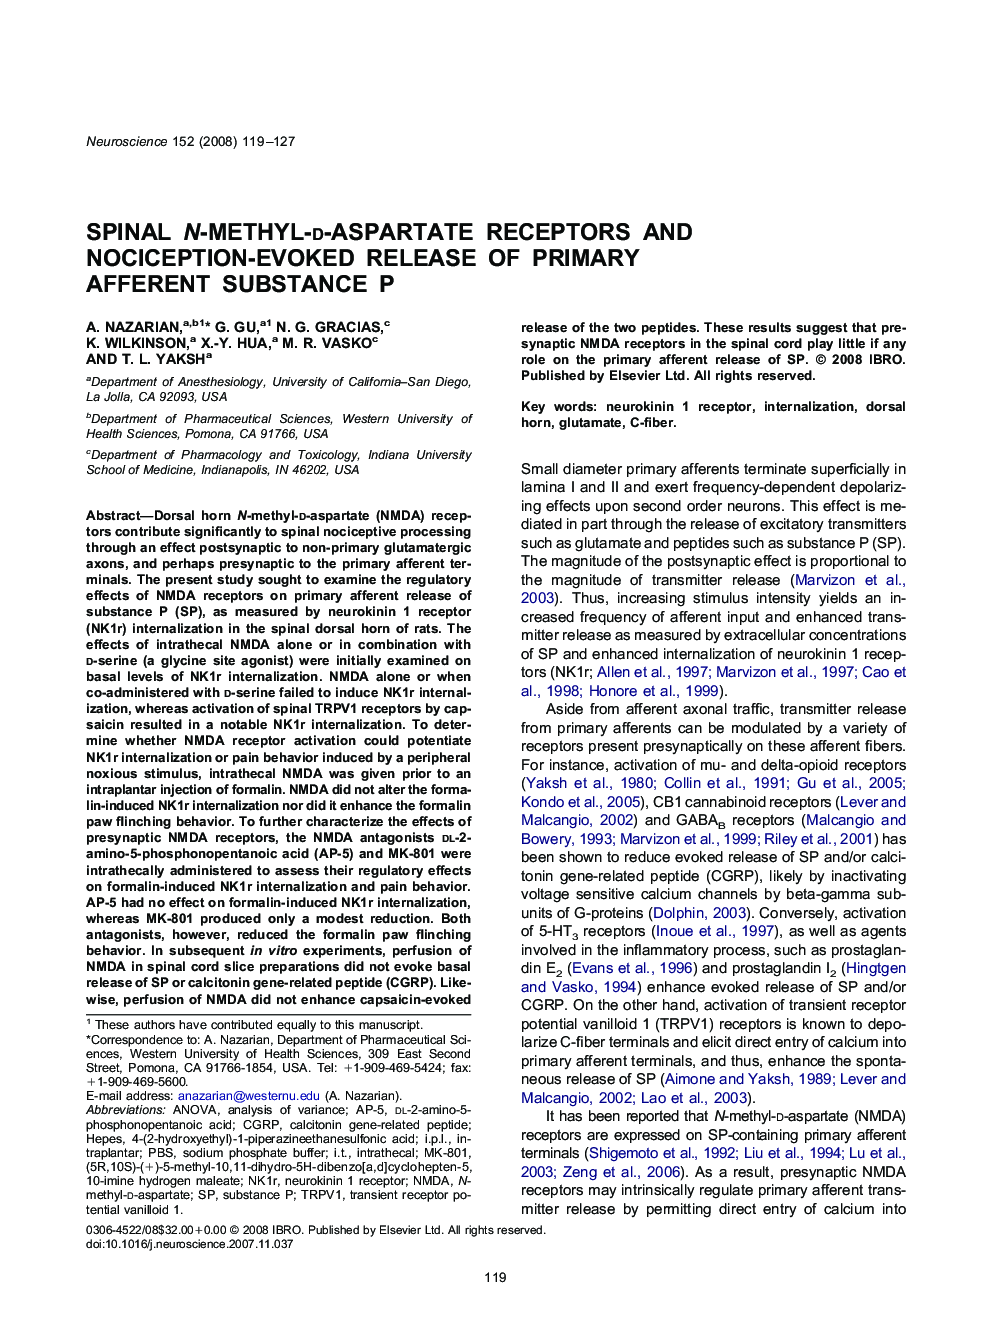 Spinal N-methyl-d-aspartate receptors and nociception-evoked release of primary afferent substance P